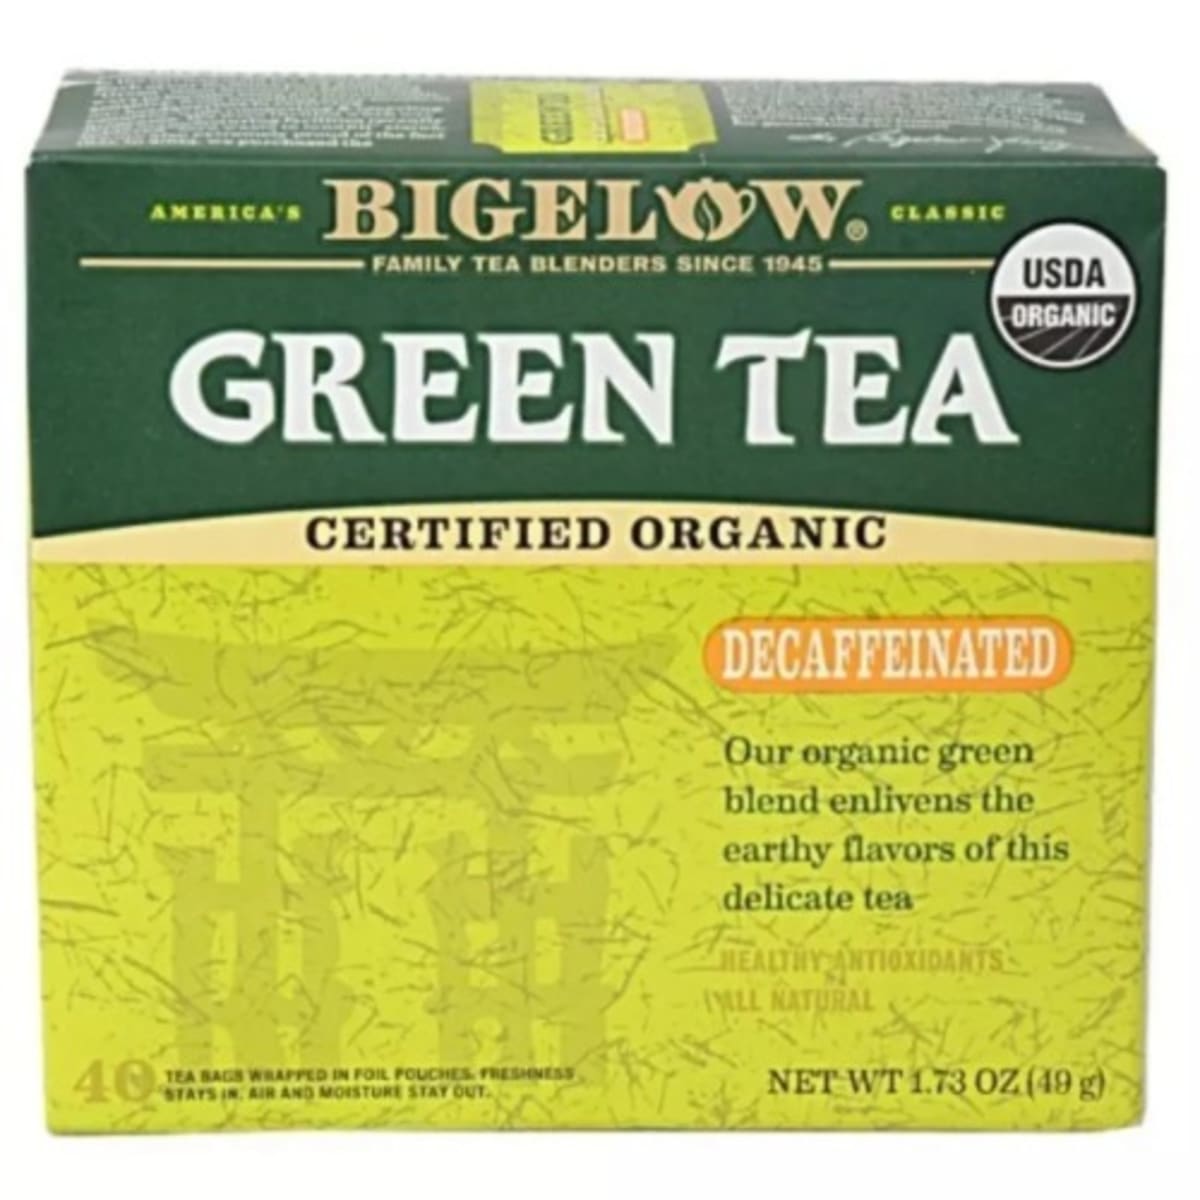 Lipton Green Tea, Caffeinated, Tea Bags 40 Count Box 